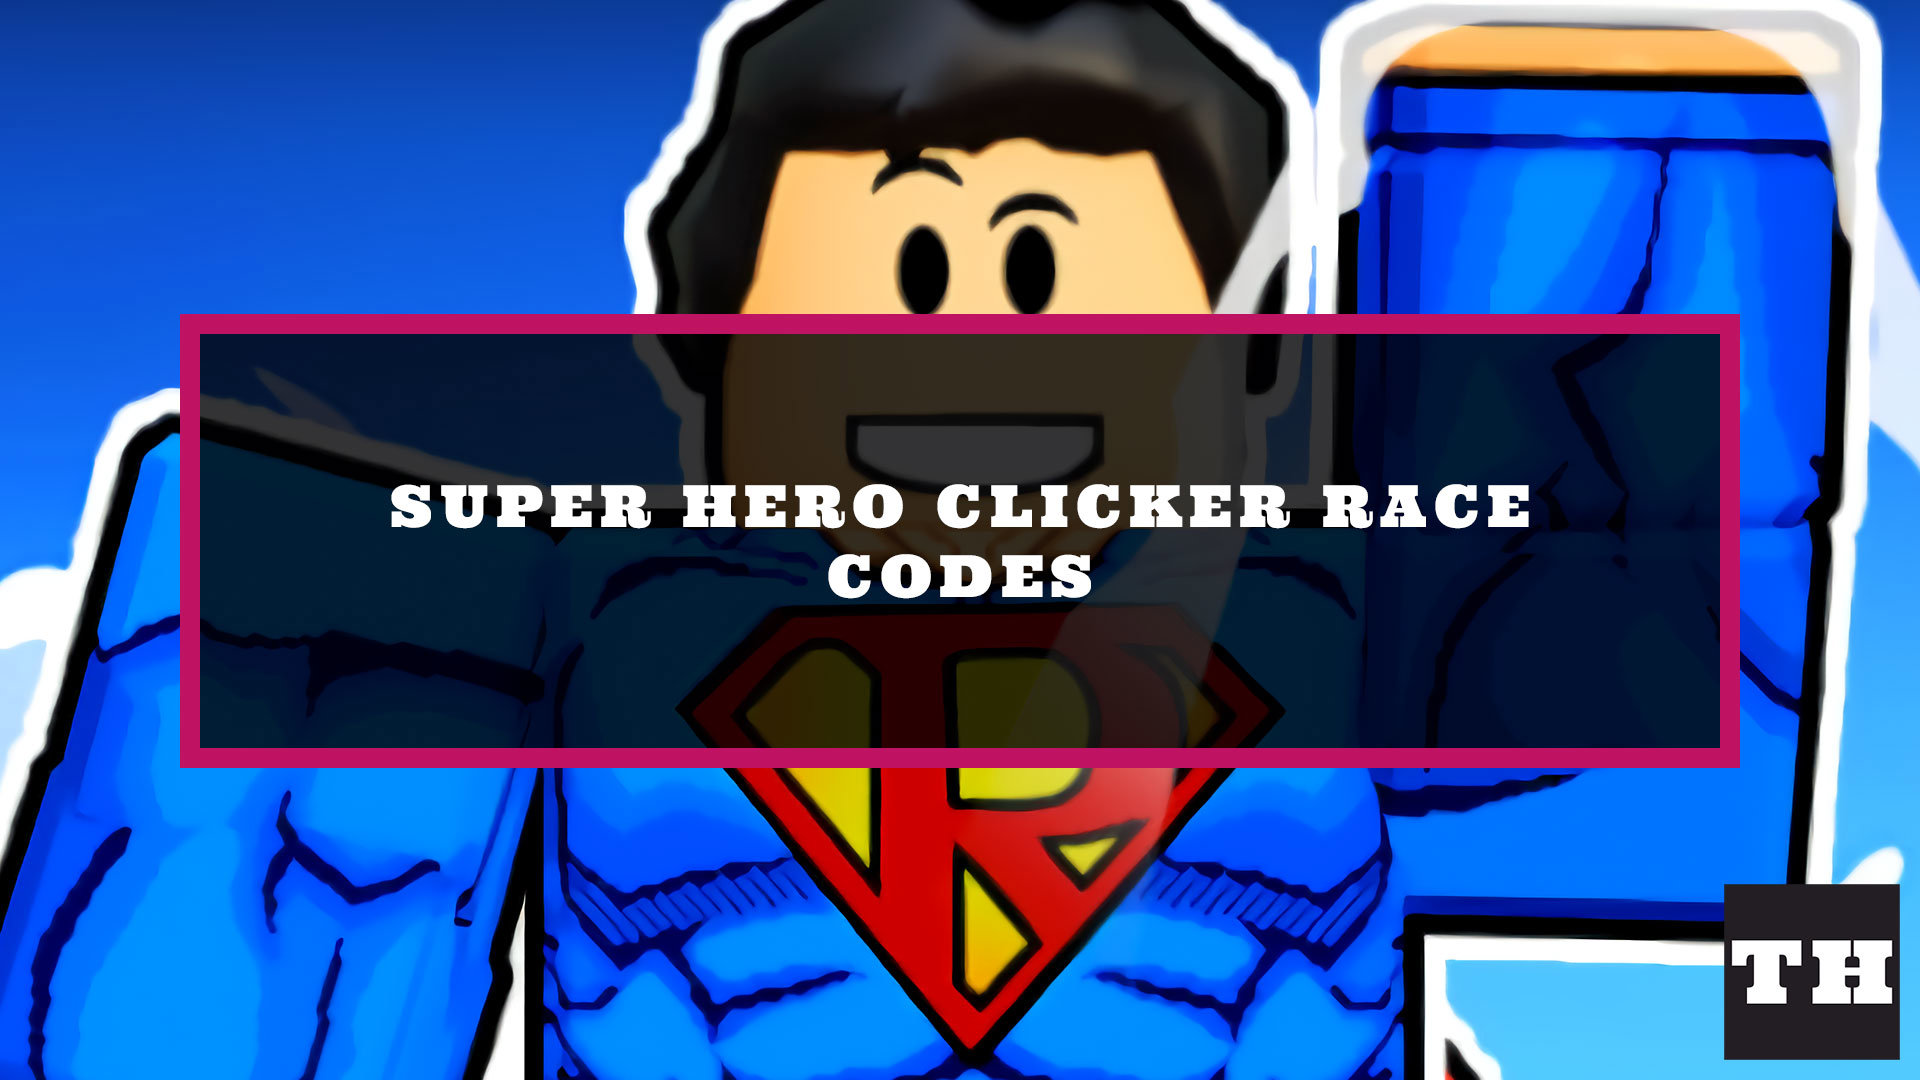 All NEW) Roblox Super hero race Clicker Codes Redeem Codes For Super Hero  Race Clicker 